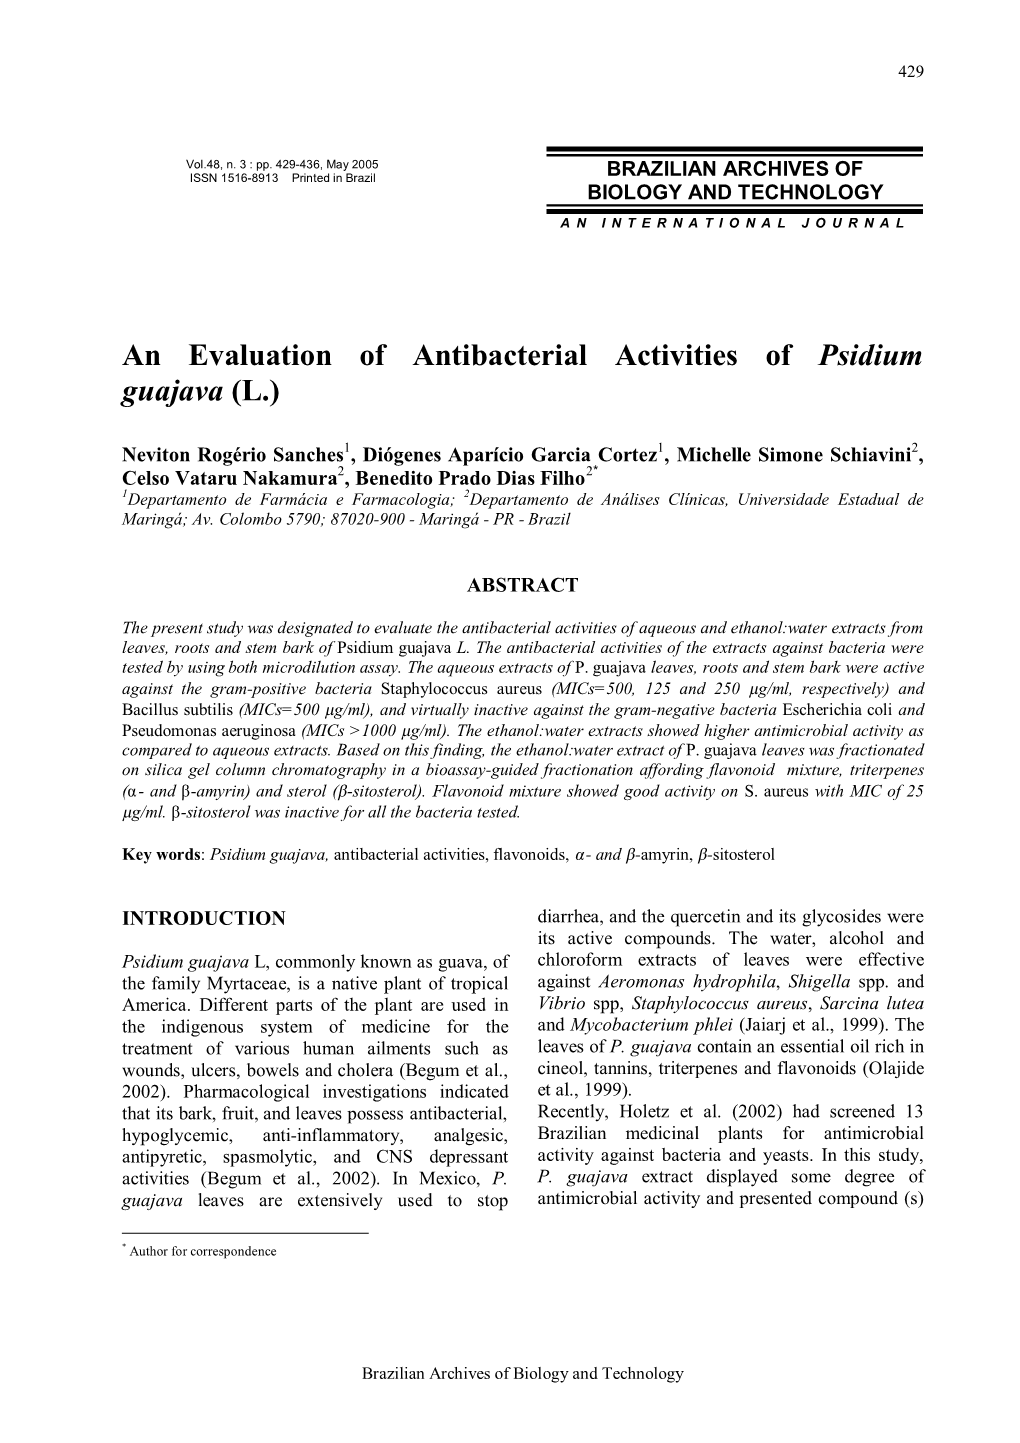 An Evaluation of Antibacterial Activities of Psidium Guajava (L.)